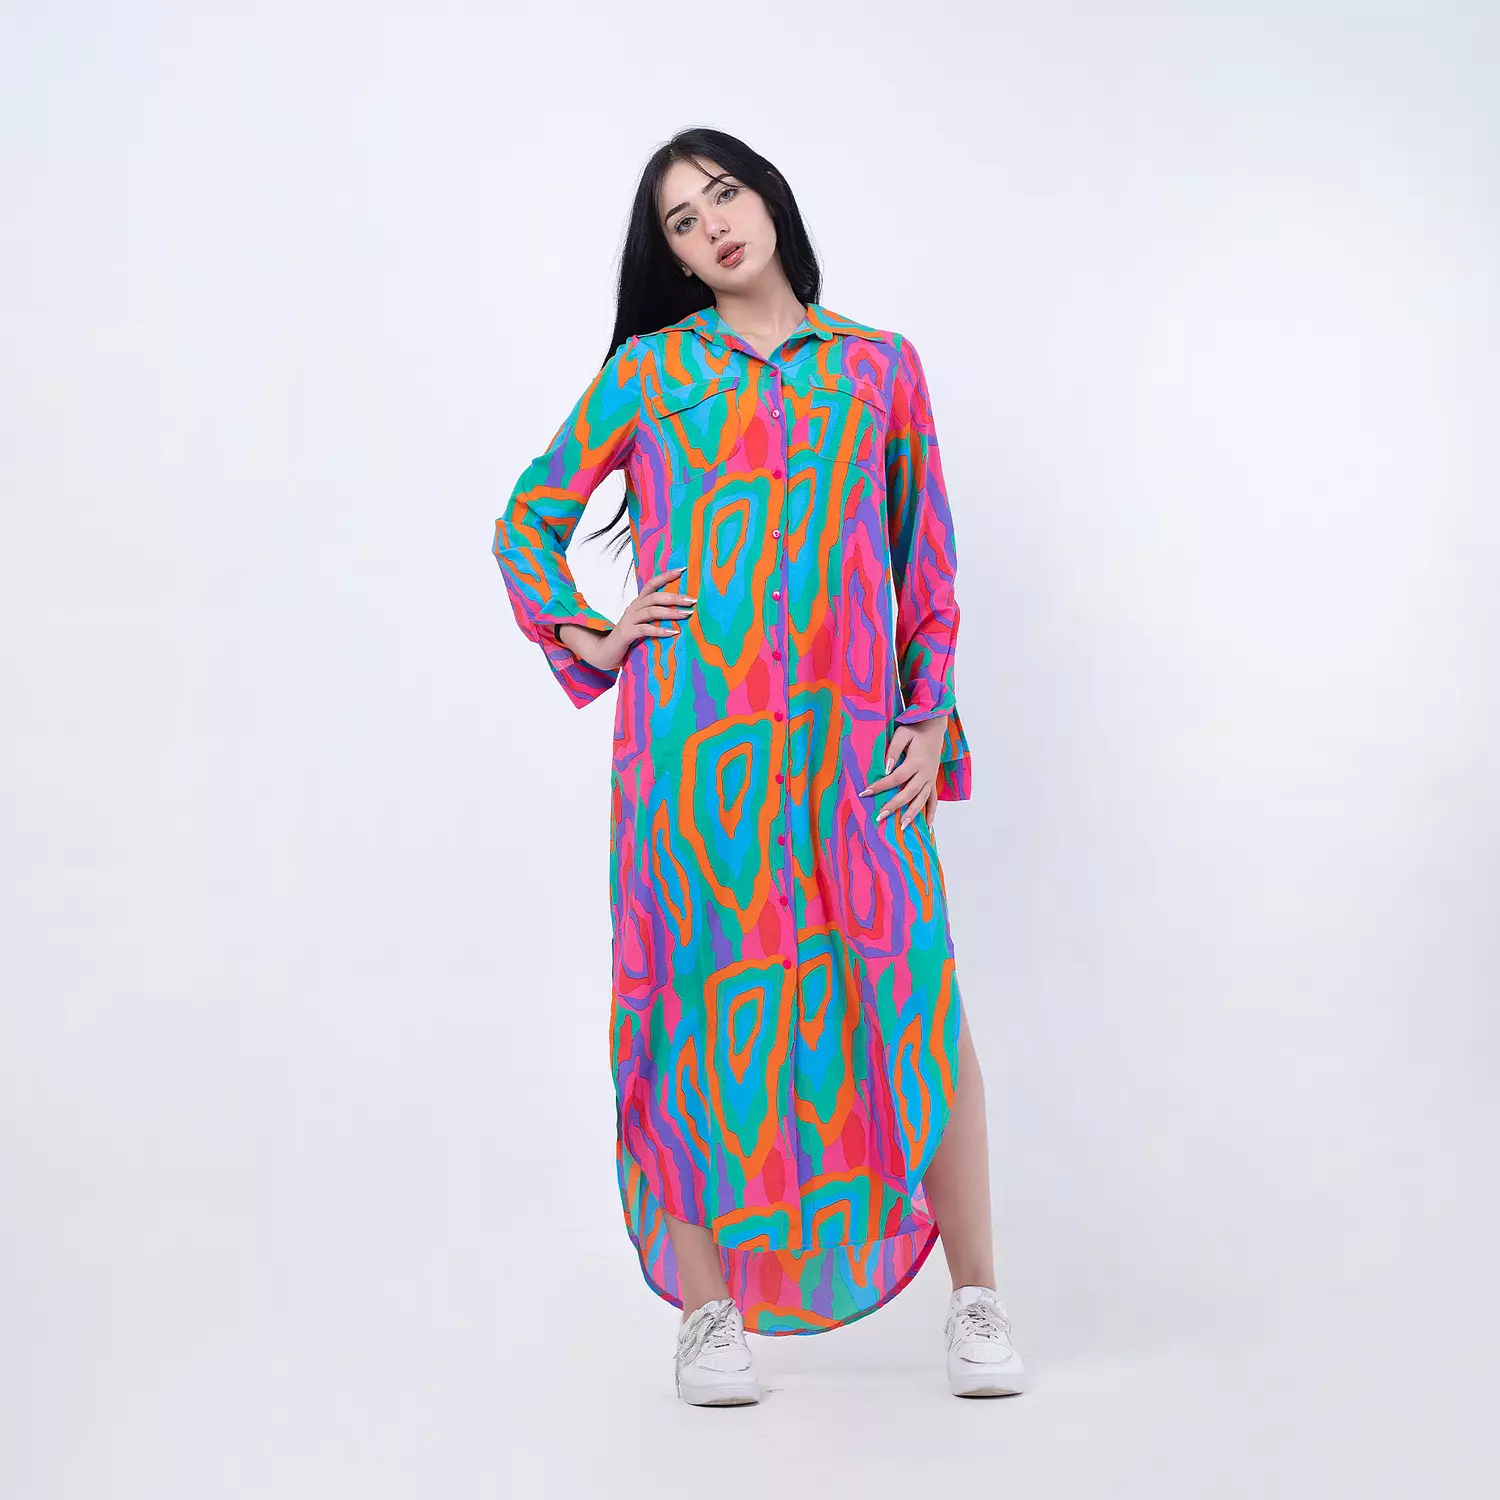 Colorful Fibran Dress hover image